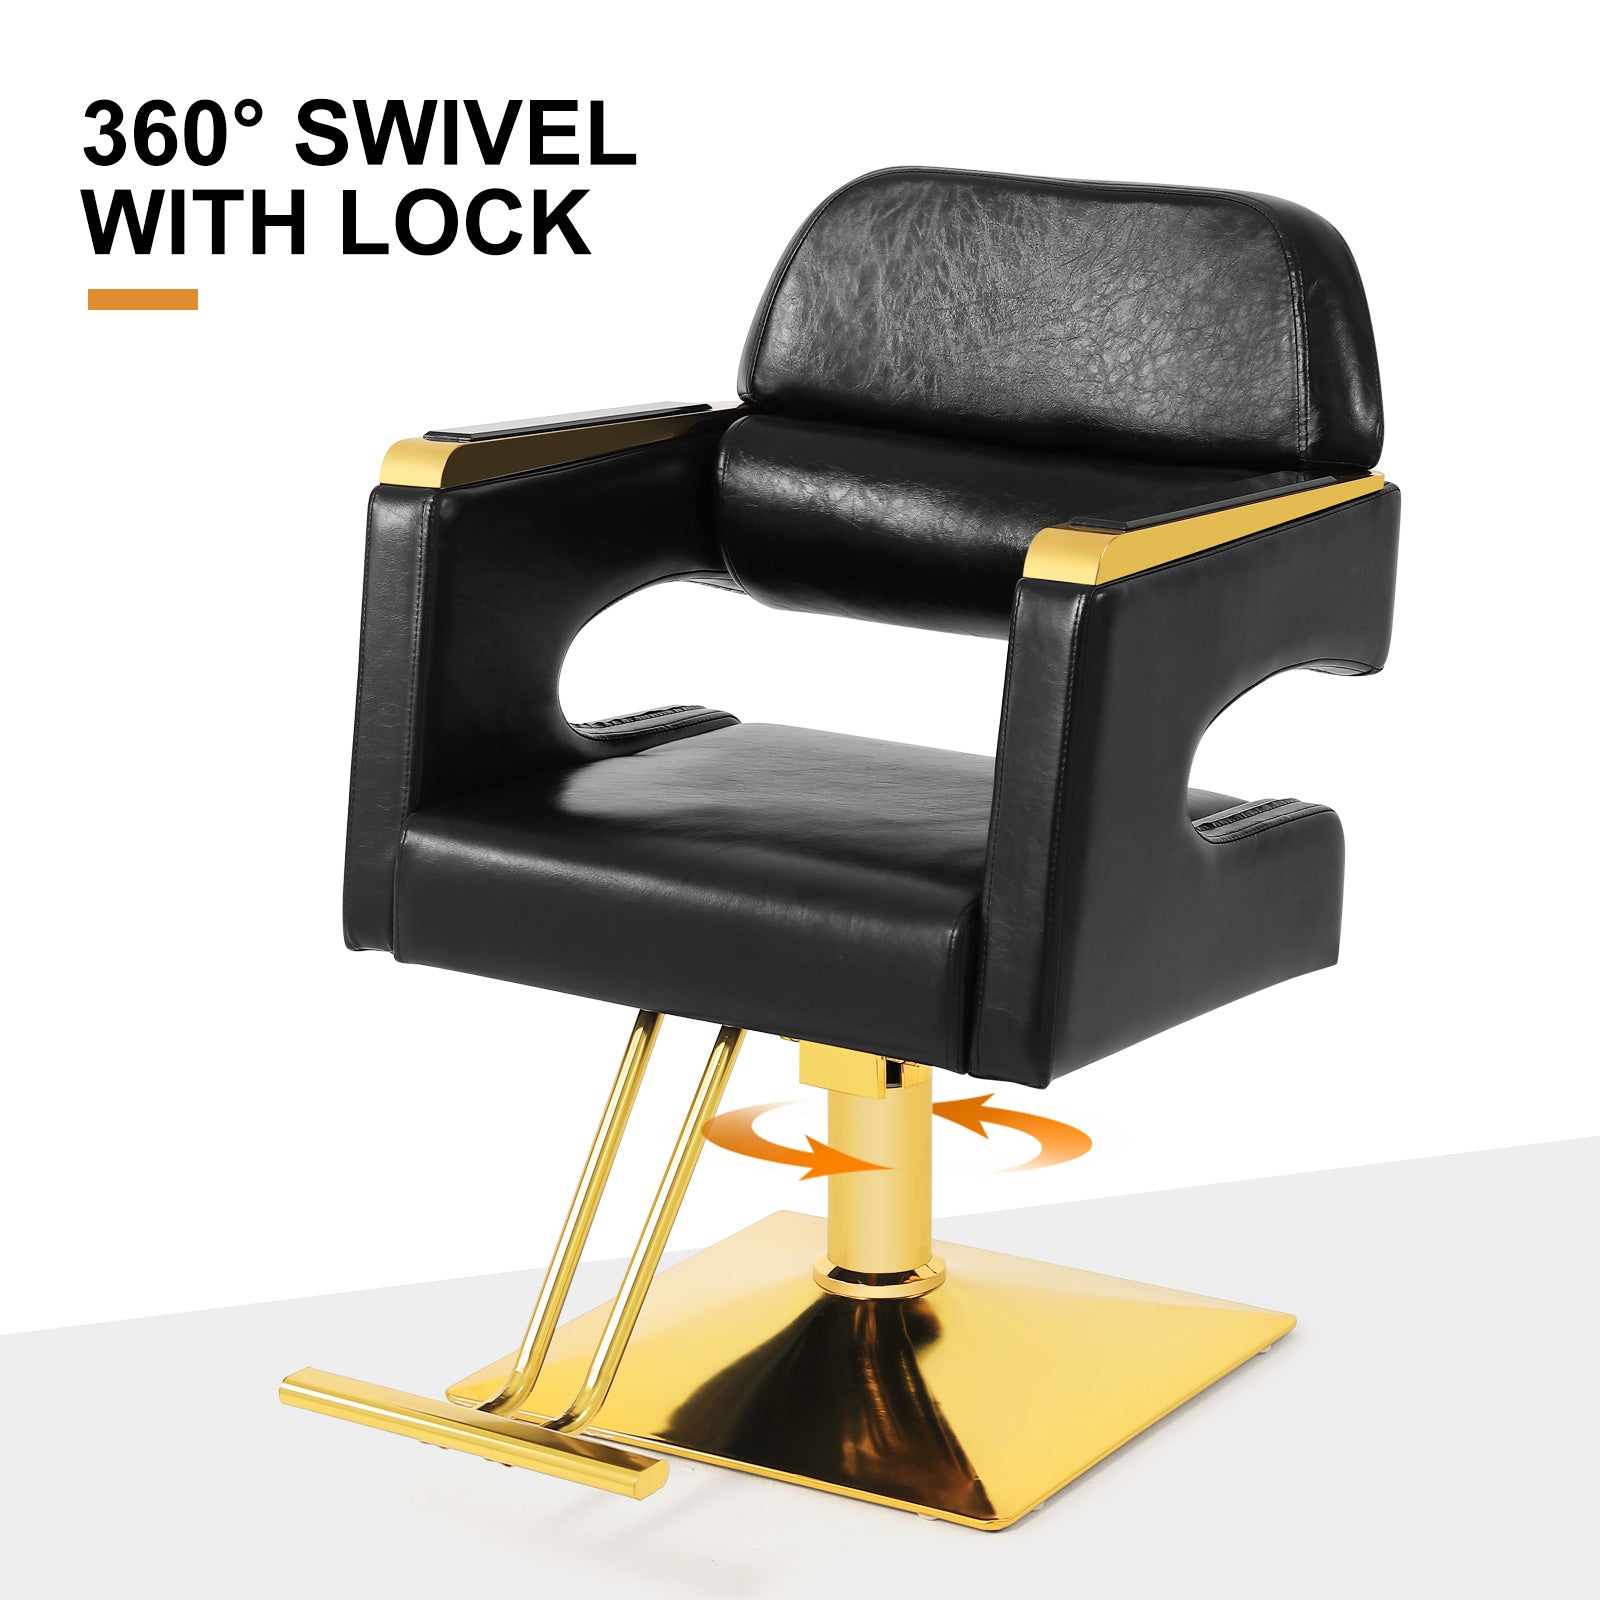 #5049 Prestige Gold Salon Styling Chair